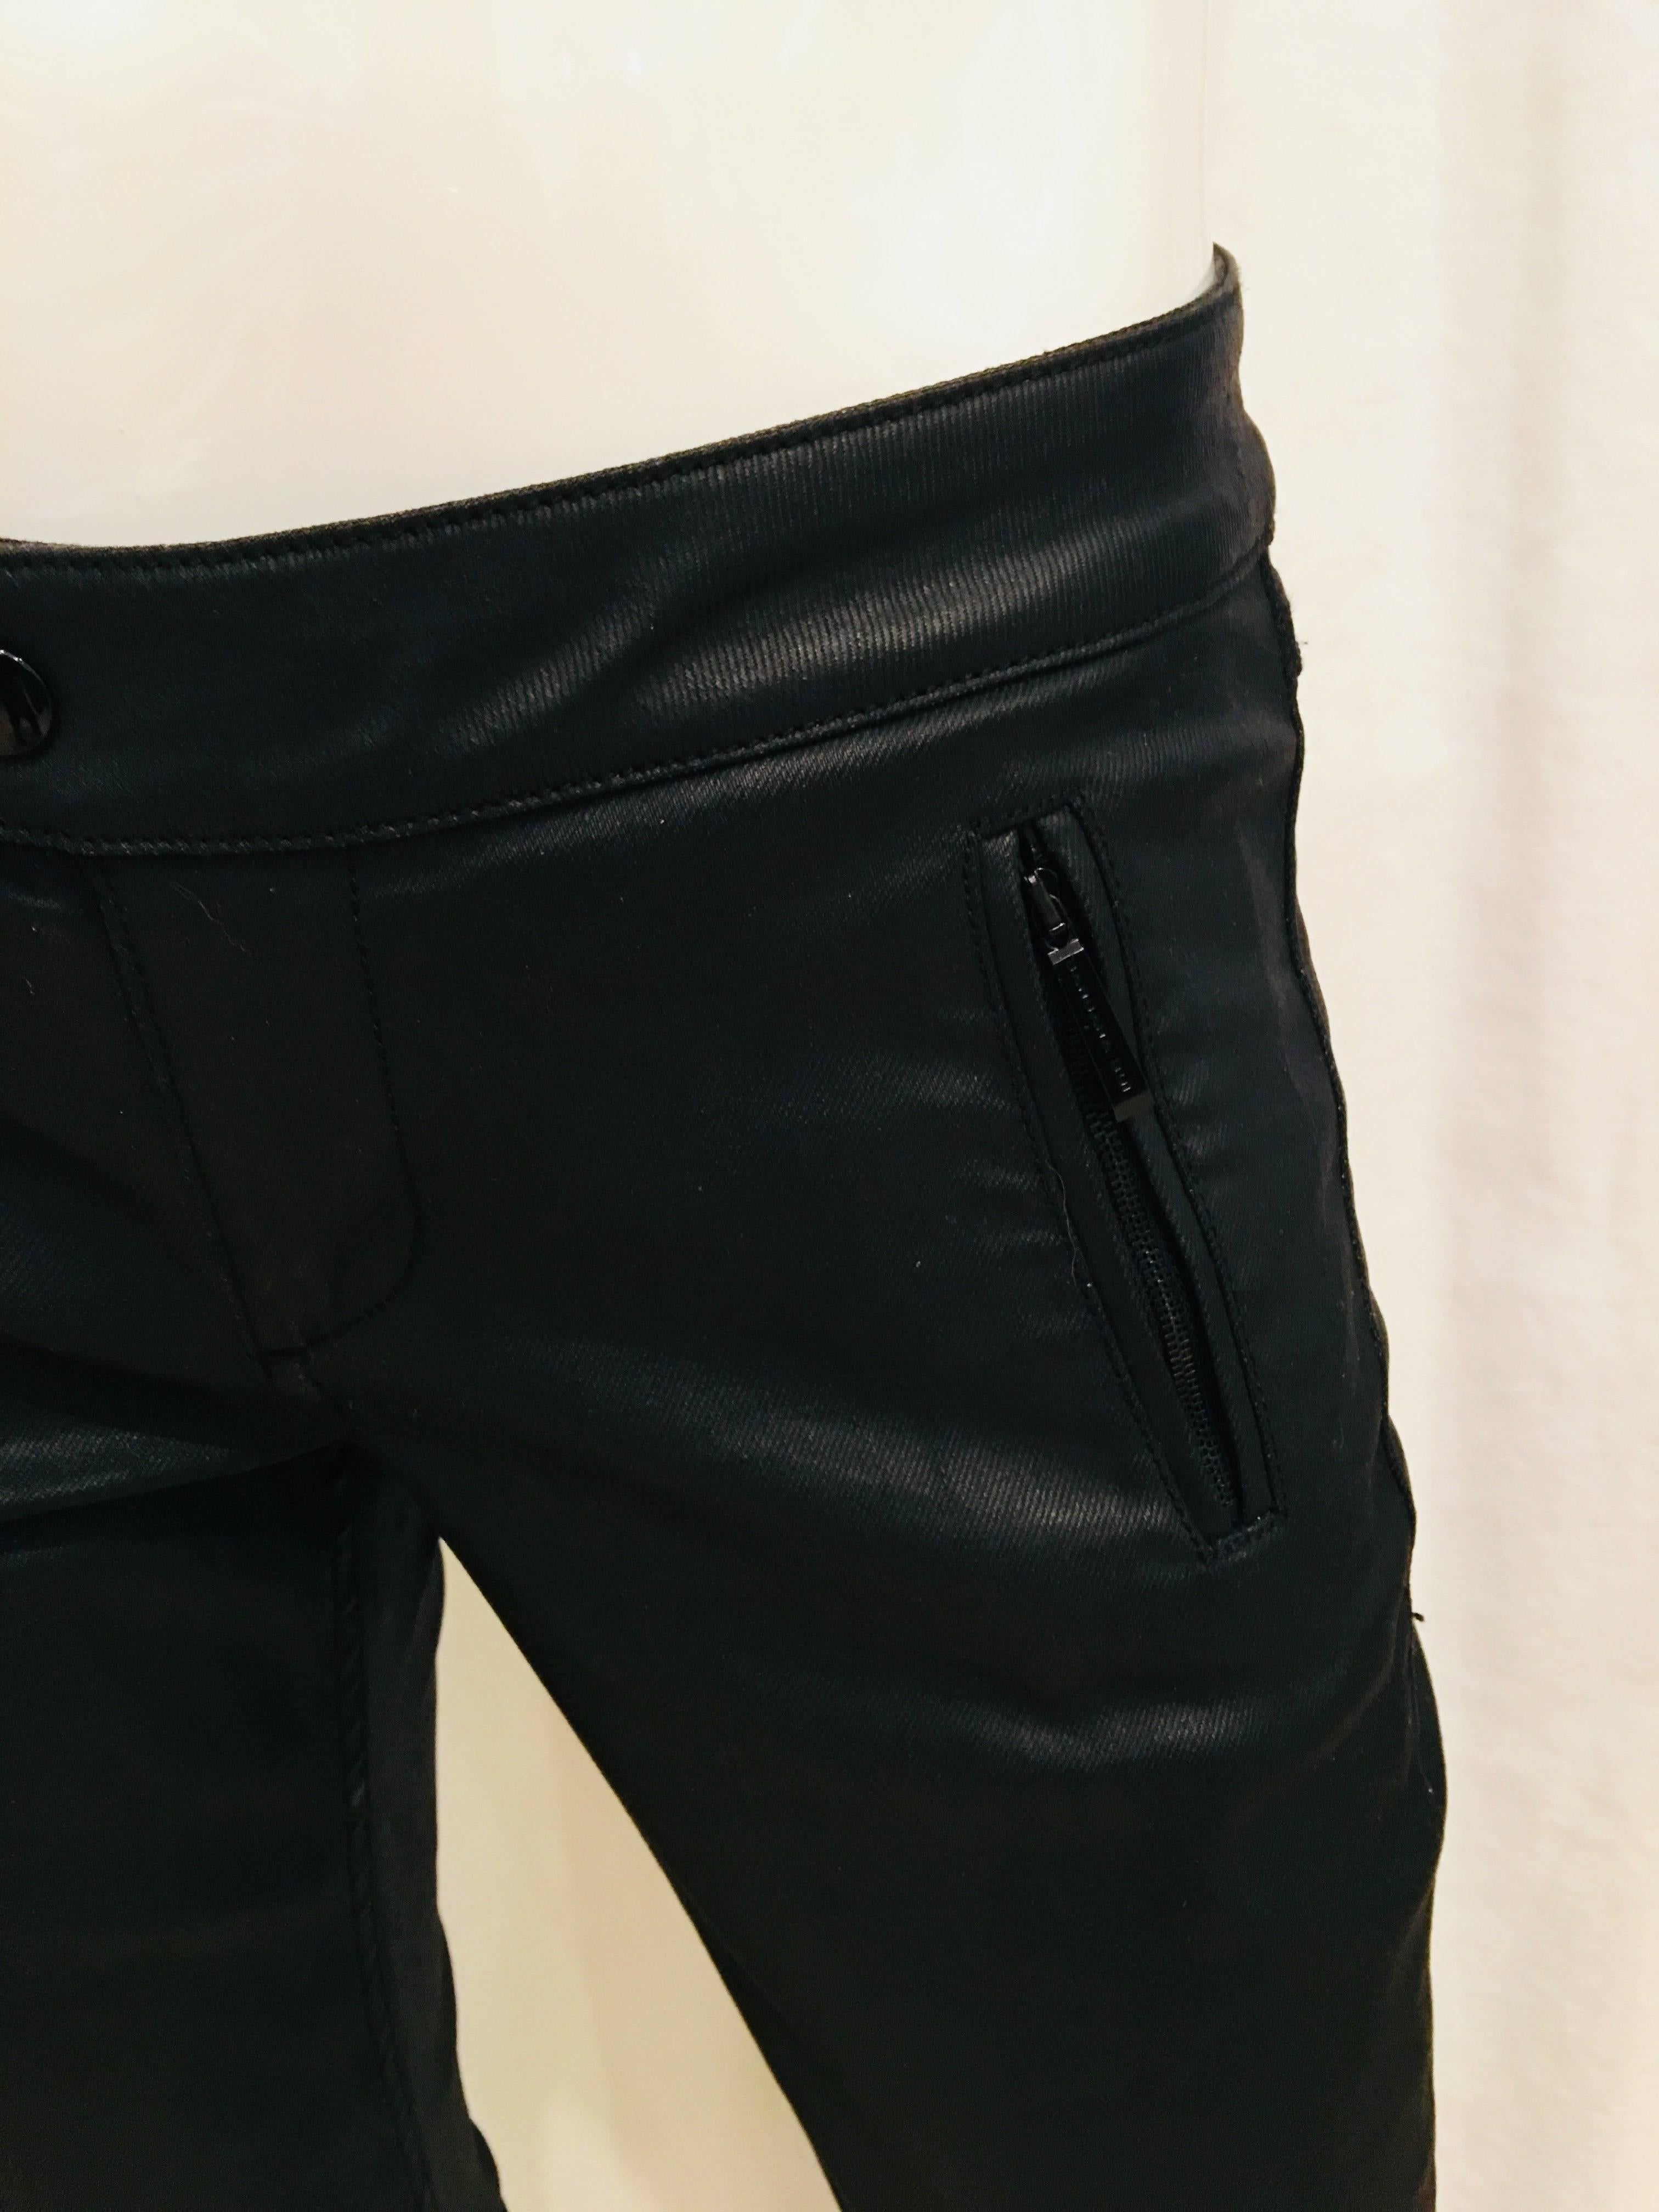 Barbara Bui Skinny Leg Leather Pants with Zipper Detail.